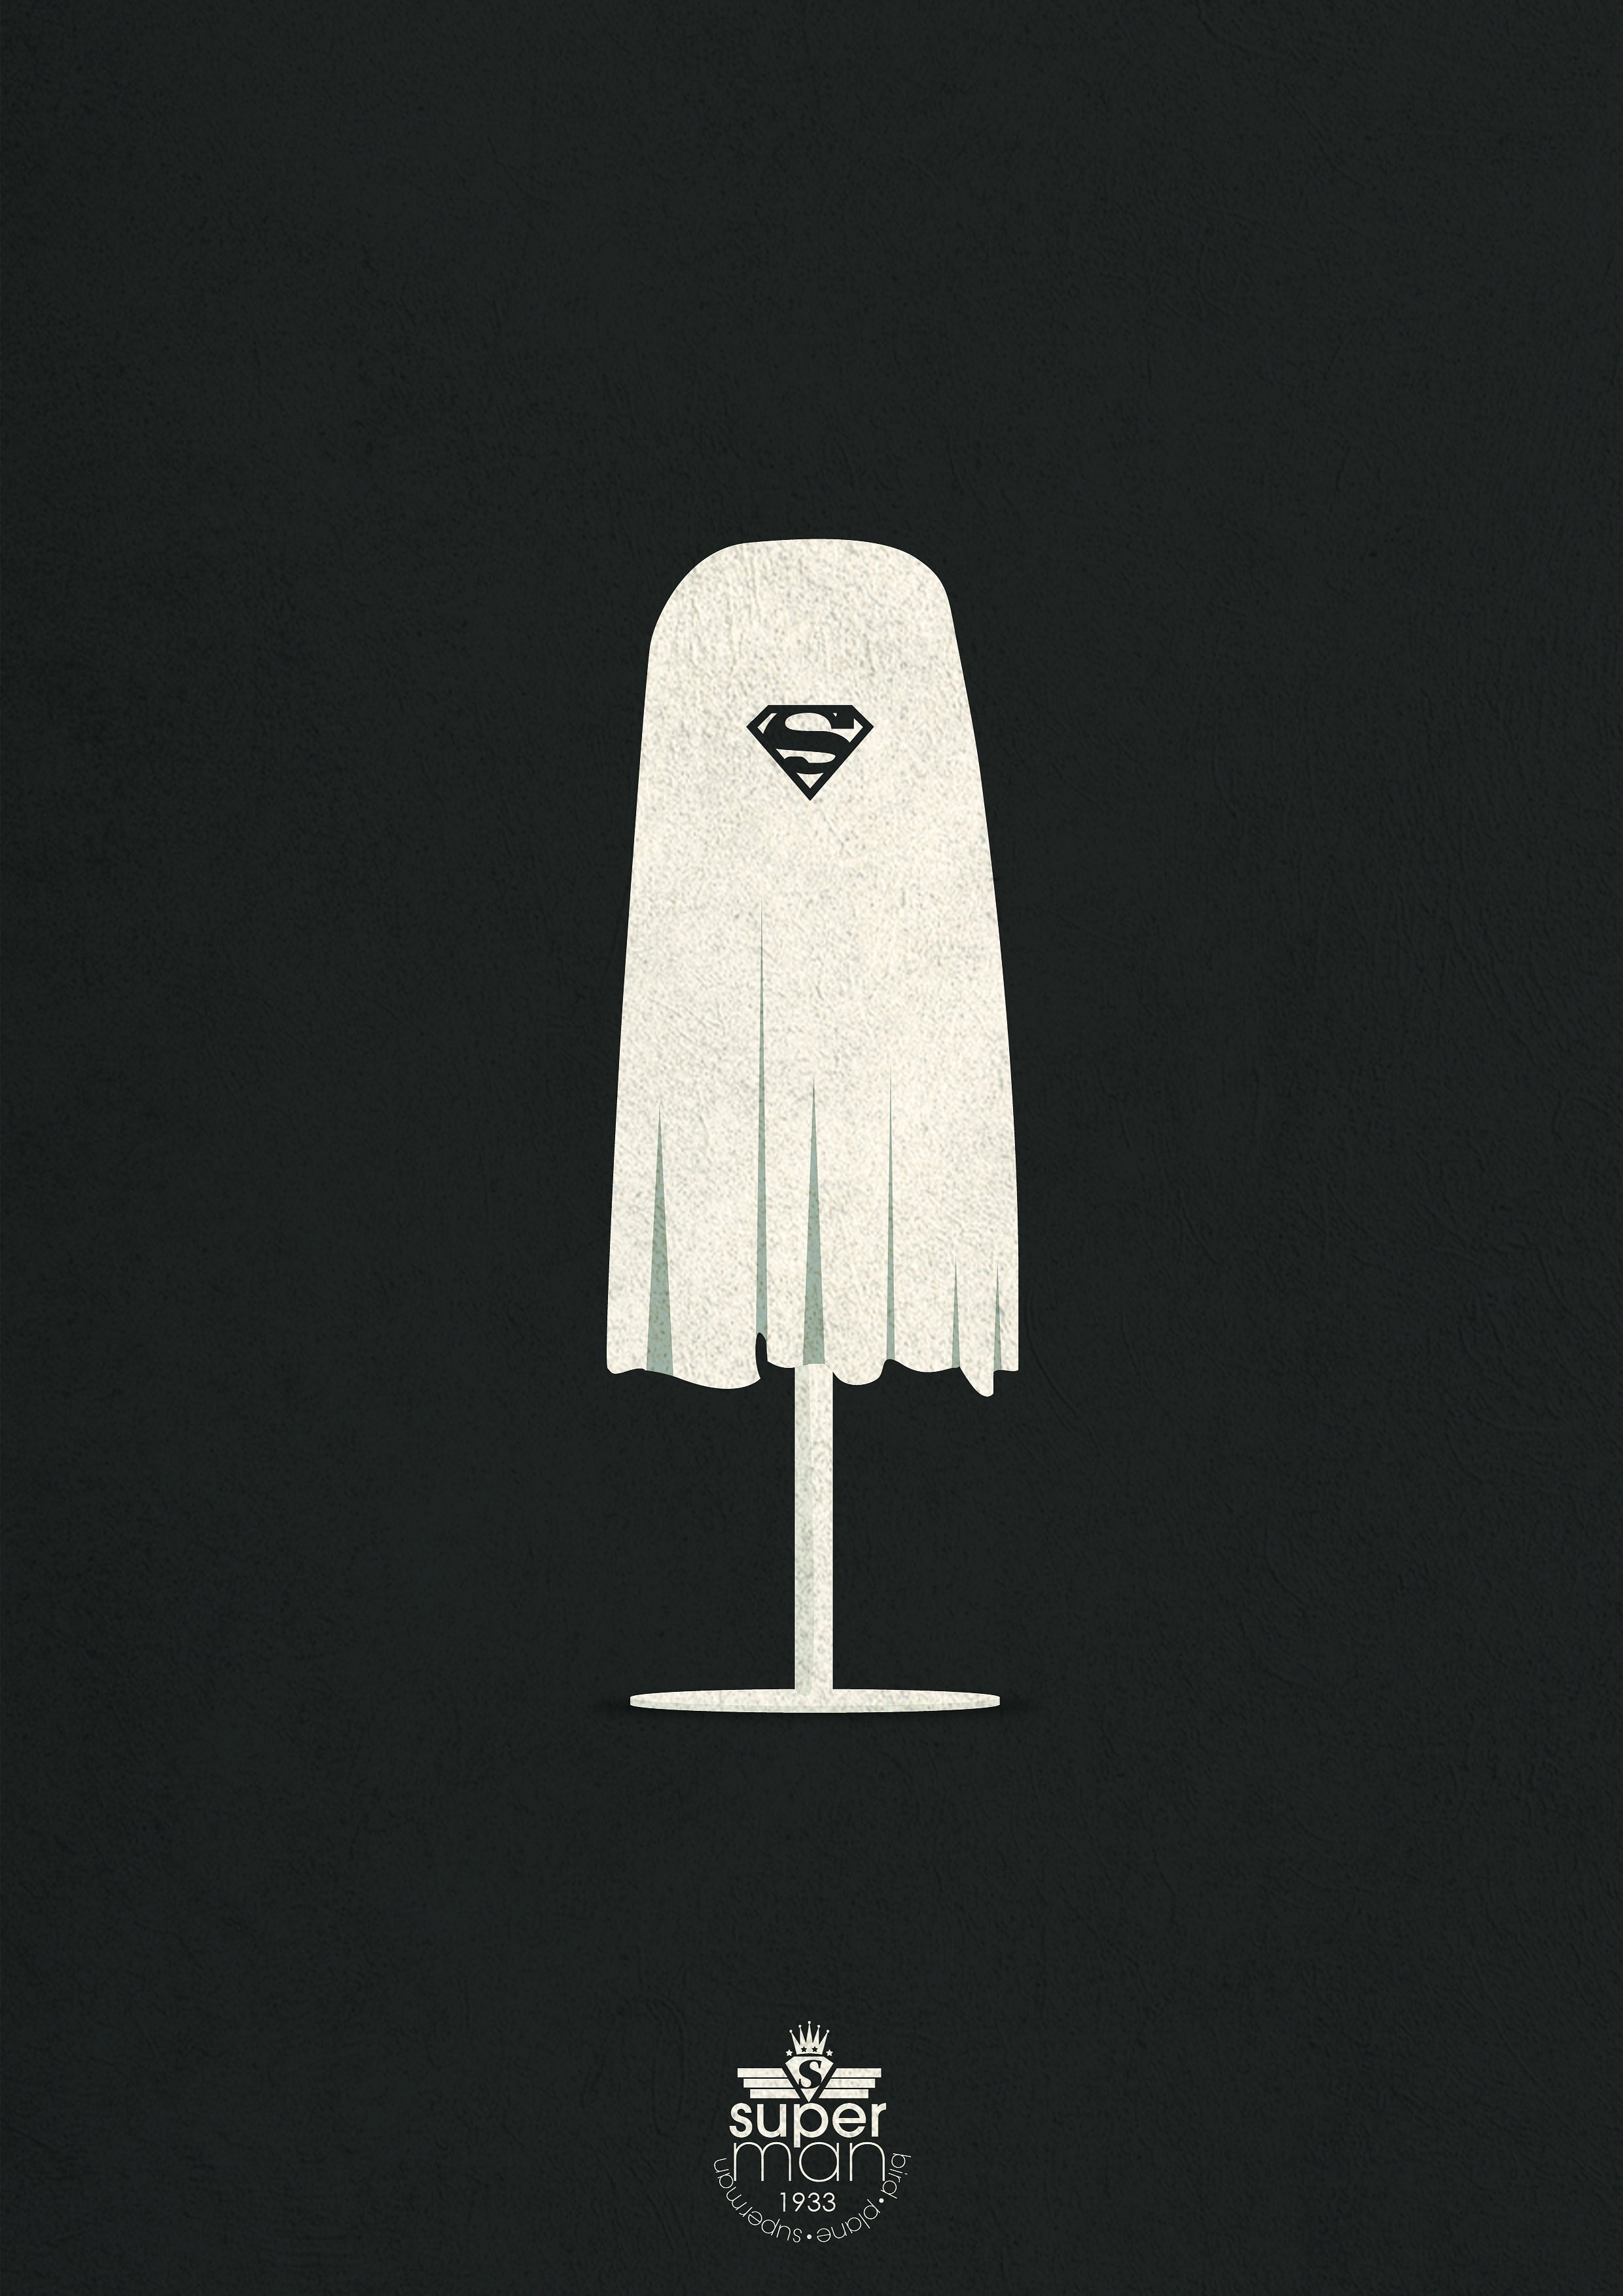 General 2480x3508 Superman minimalism cape 1933 (Year) DC Comics